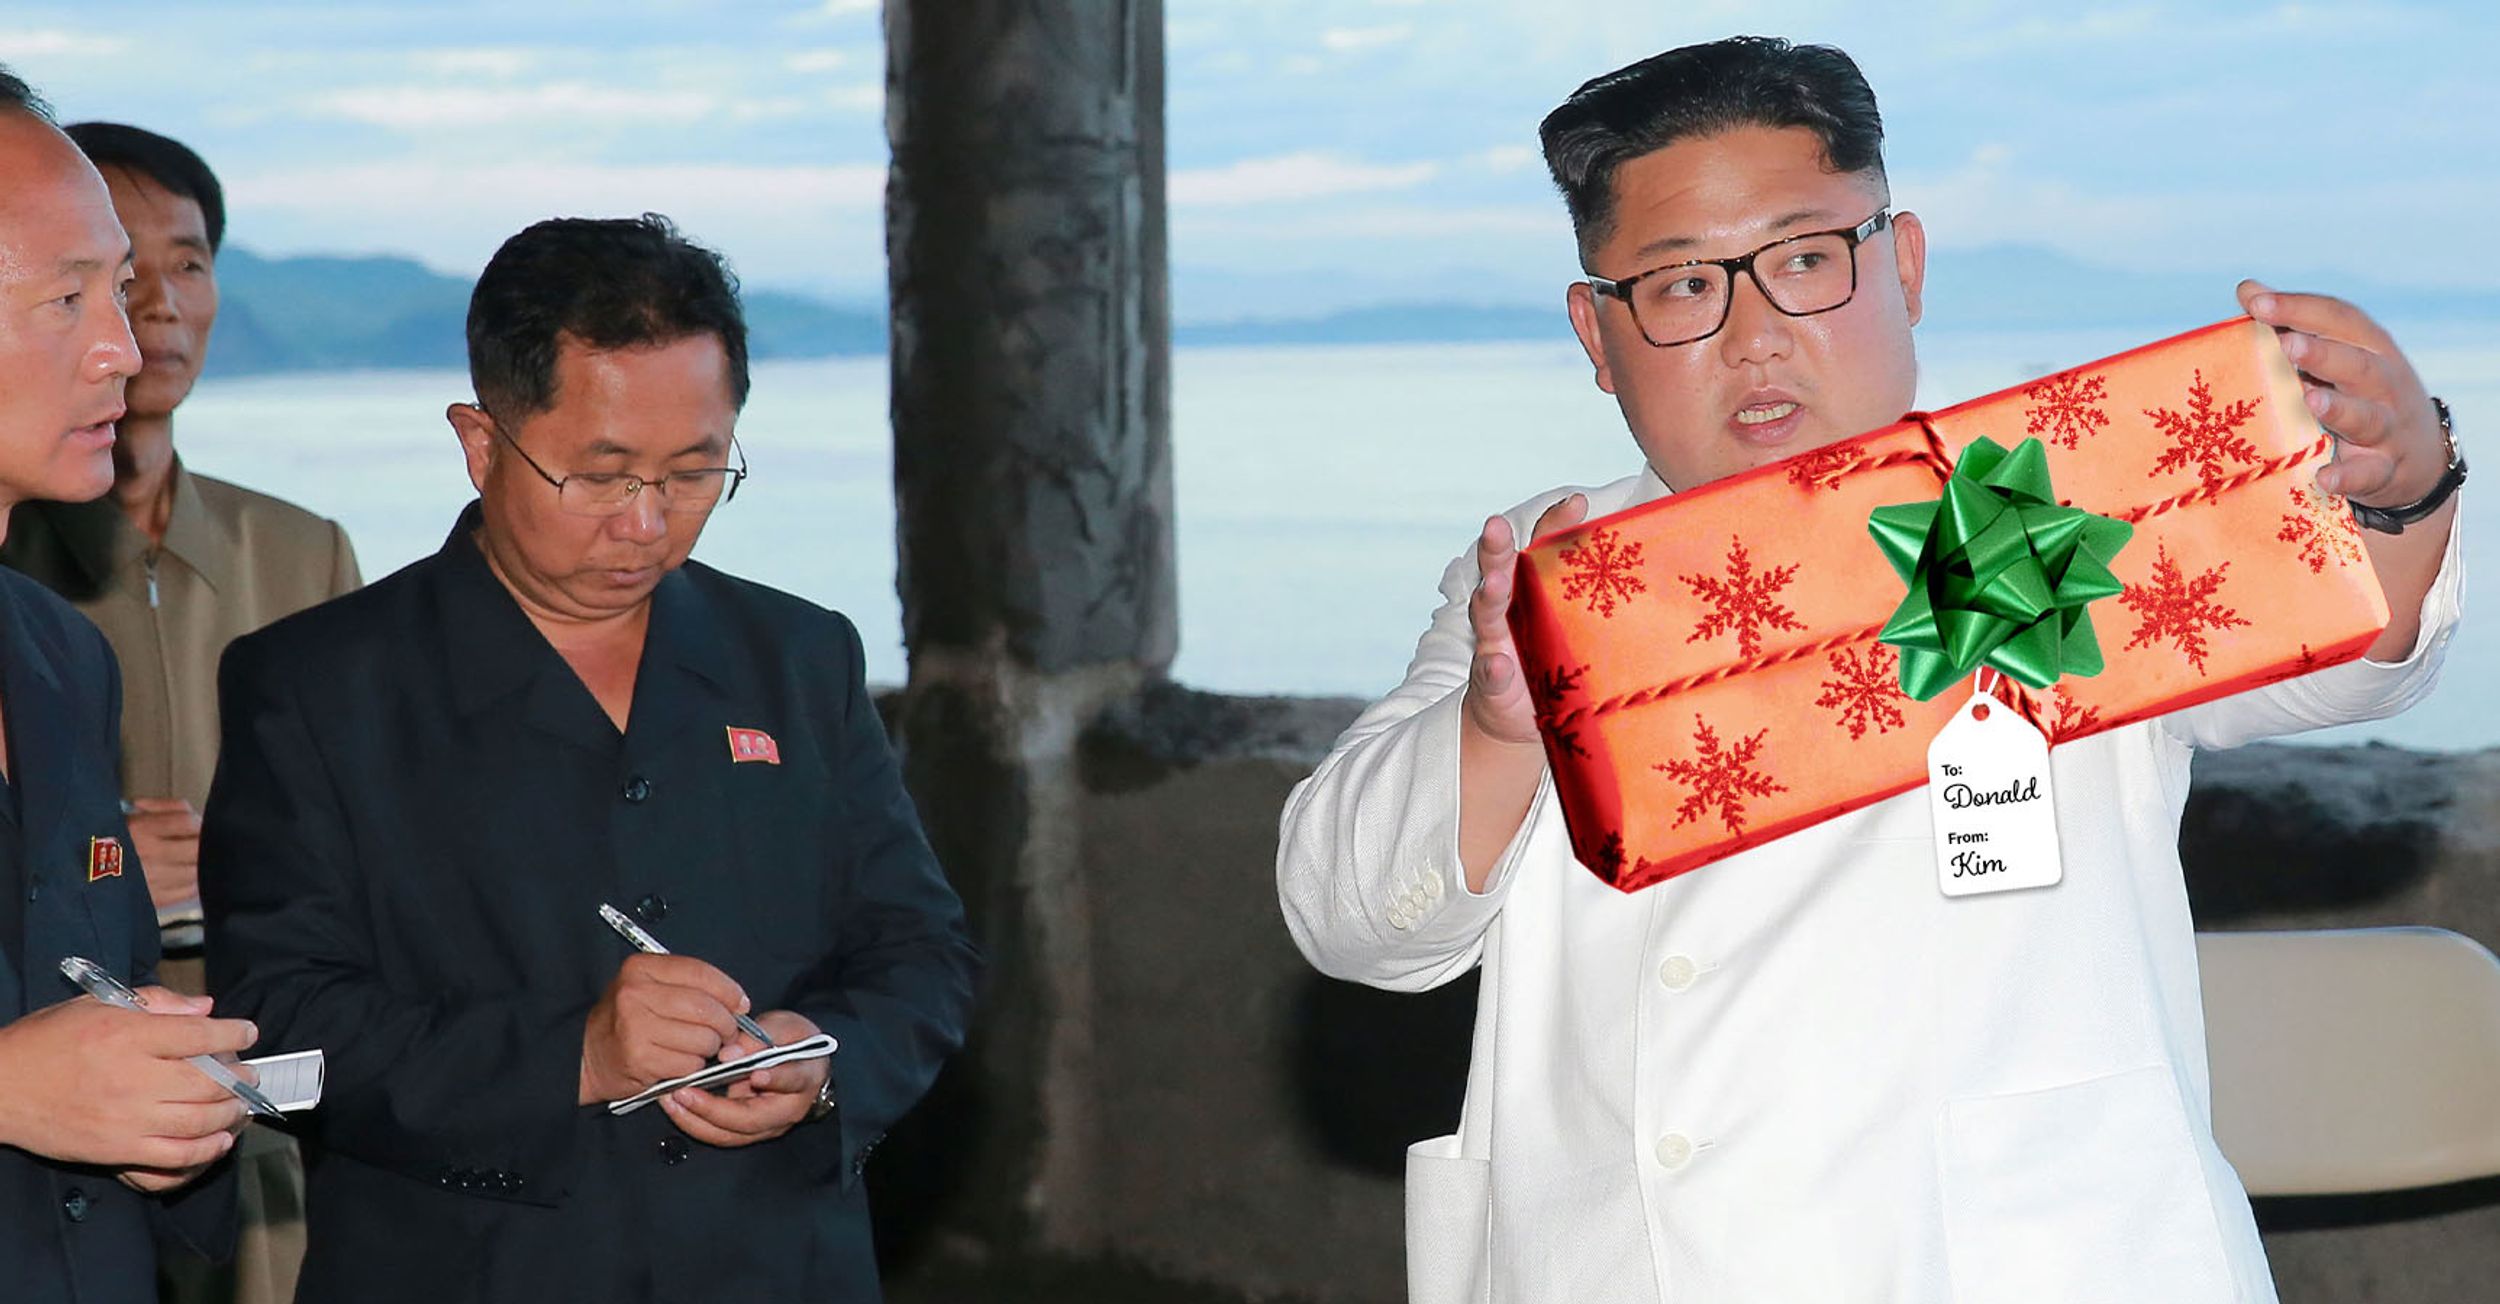 What We’re Watching: It’s a Kim Jong-un Christmas!